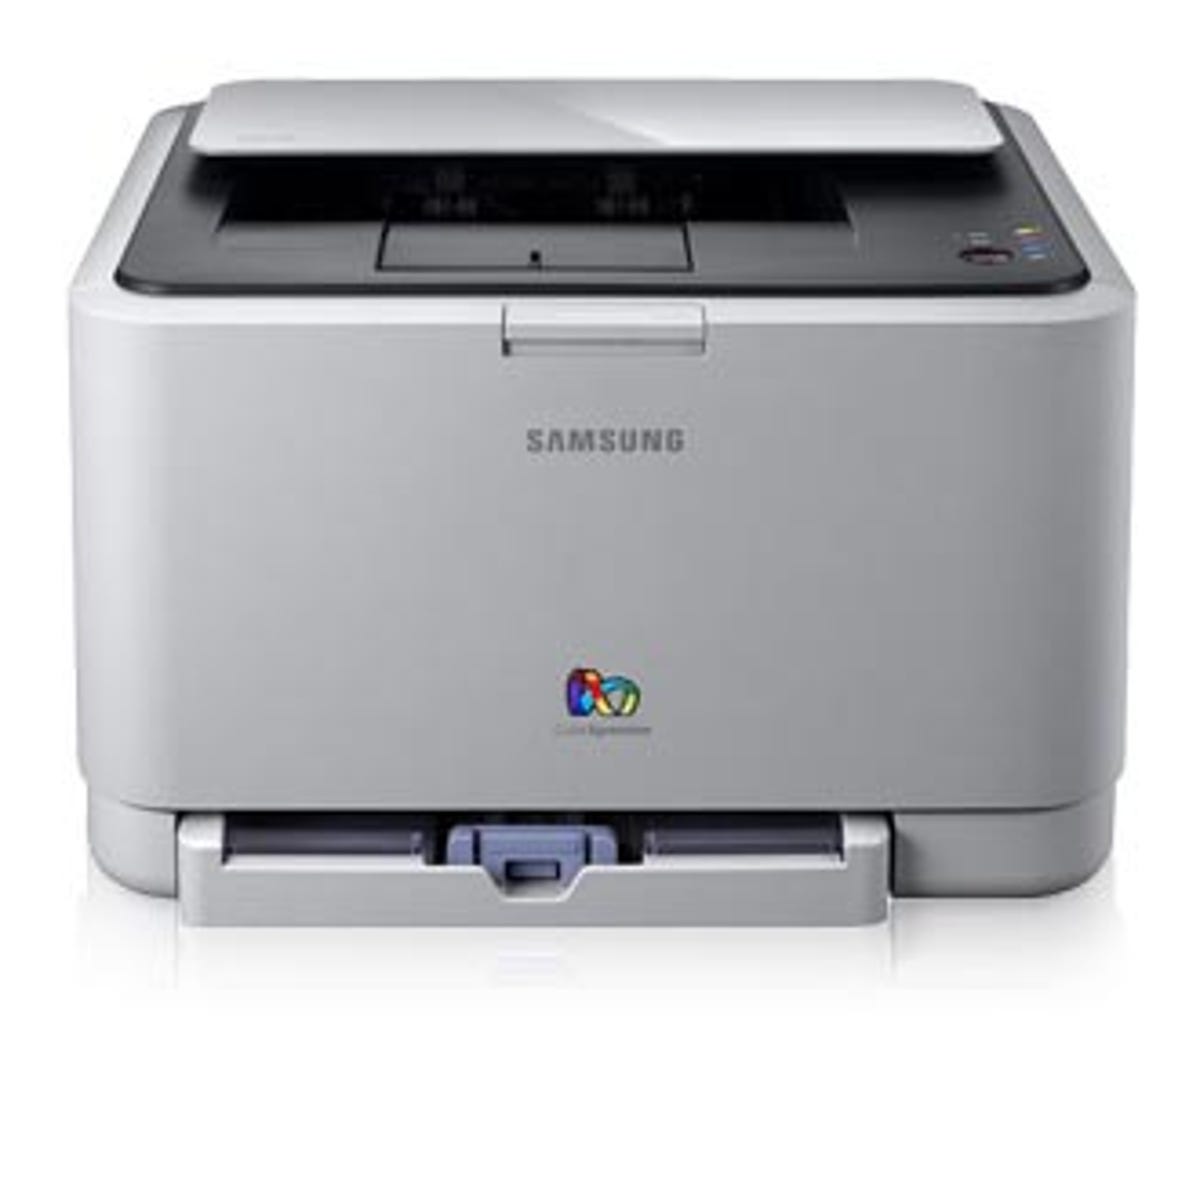 Ремонт принтера самсунг цена. Samsung CLP-310. Принтер самсунг CLP 310. Лазерный принтер самсунг 310 цветной. Принтер Samsung Color Xpression.